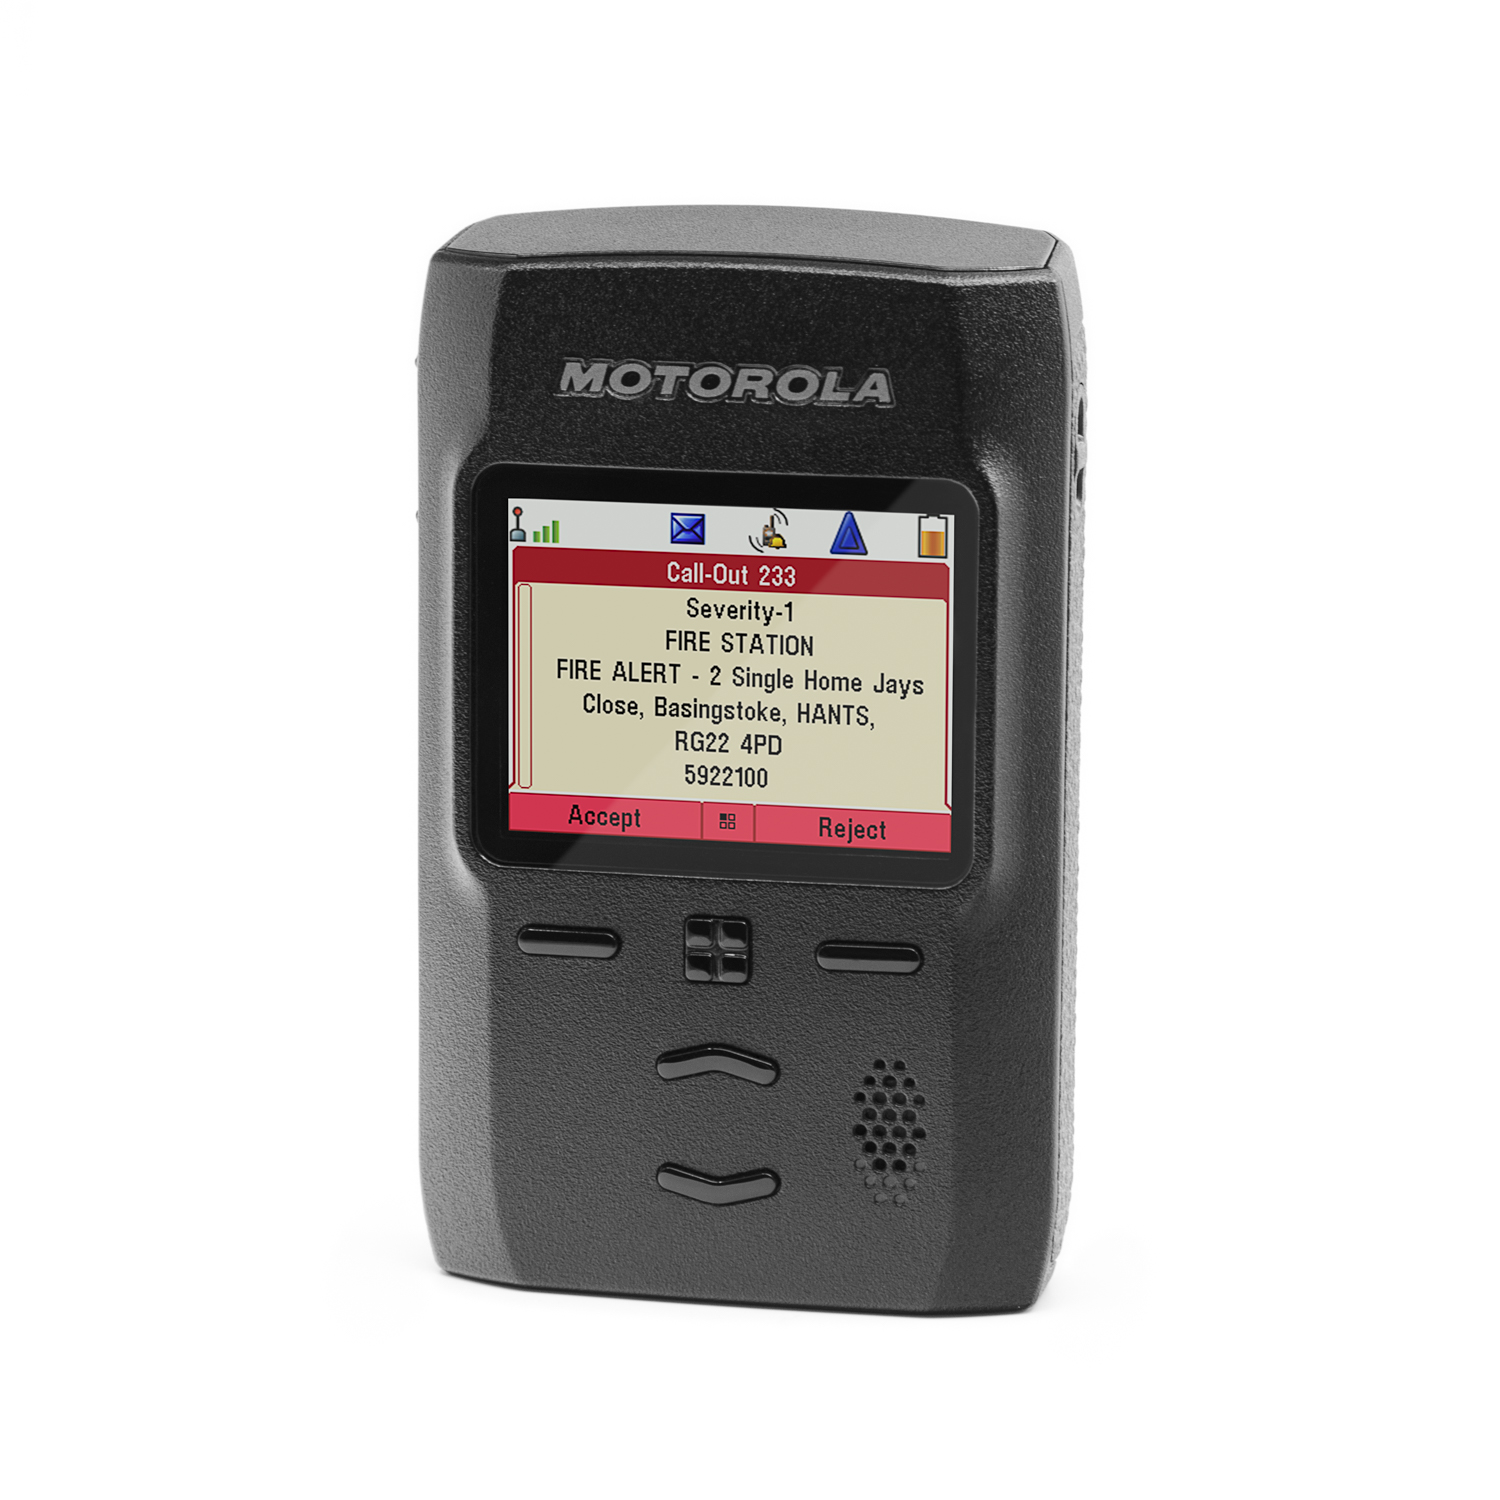 TETRA Portables : Motorola TPG2200